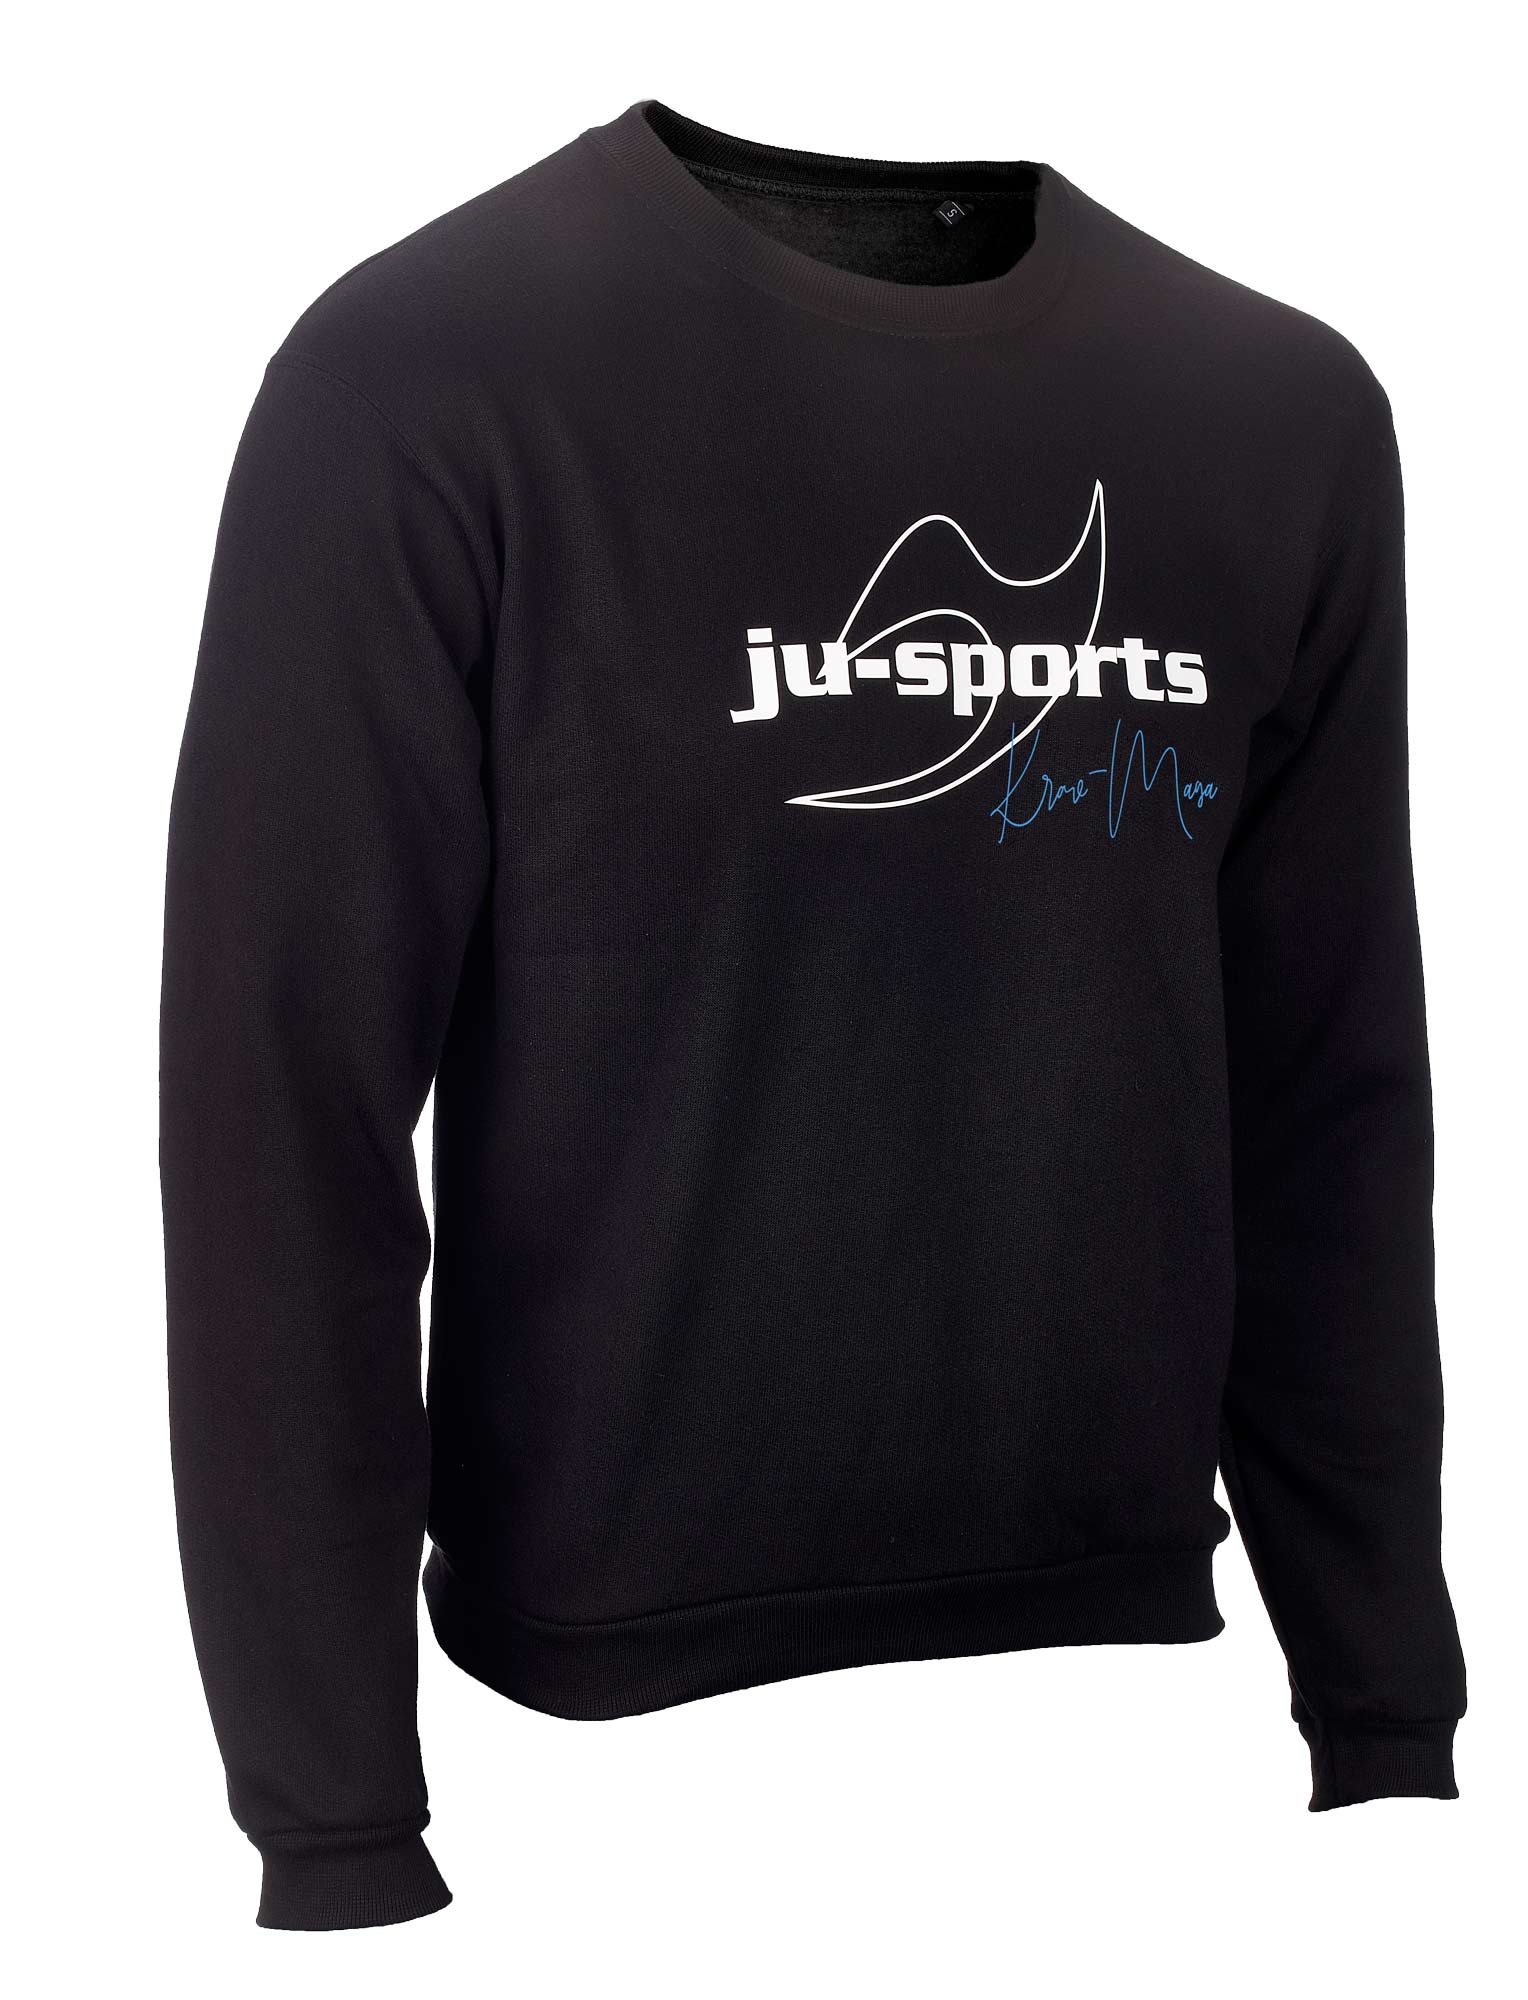 Ju-Sports Signature Line "Krav Maga" Sweater